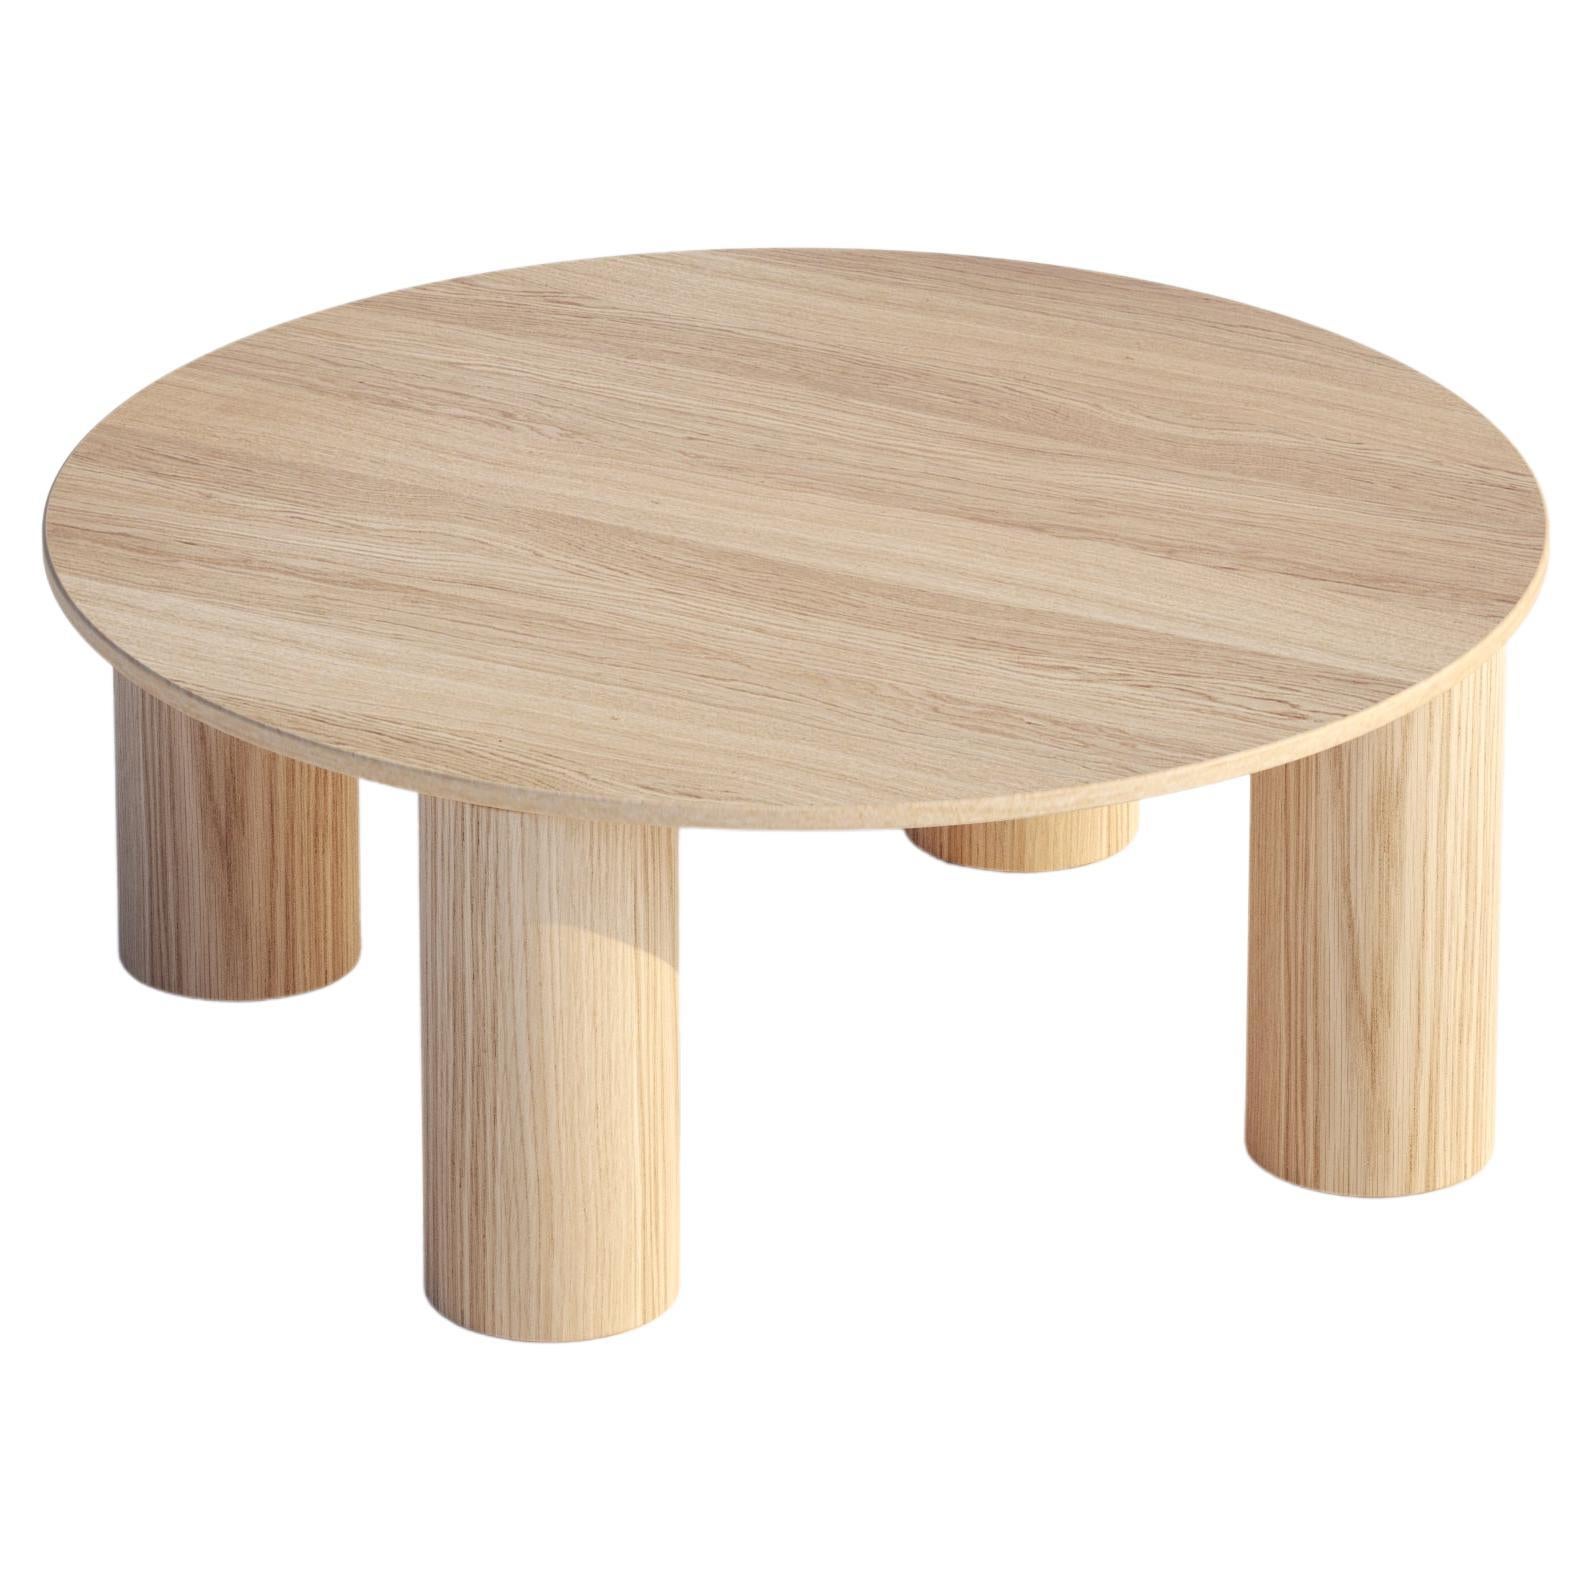 Medium Round Living Room Table in Oak, Natural Oak For Sale